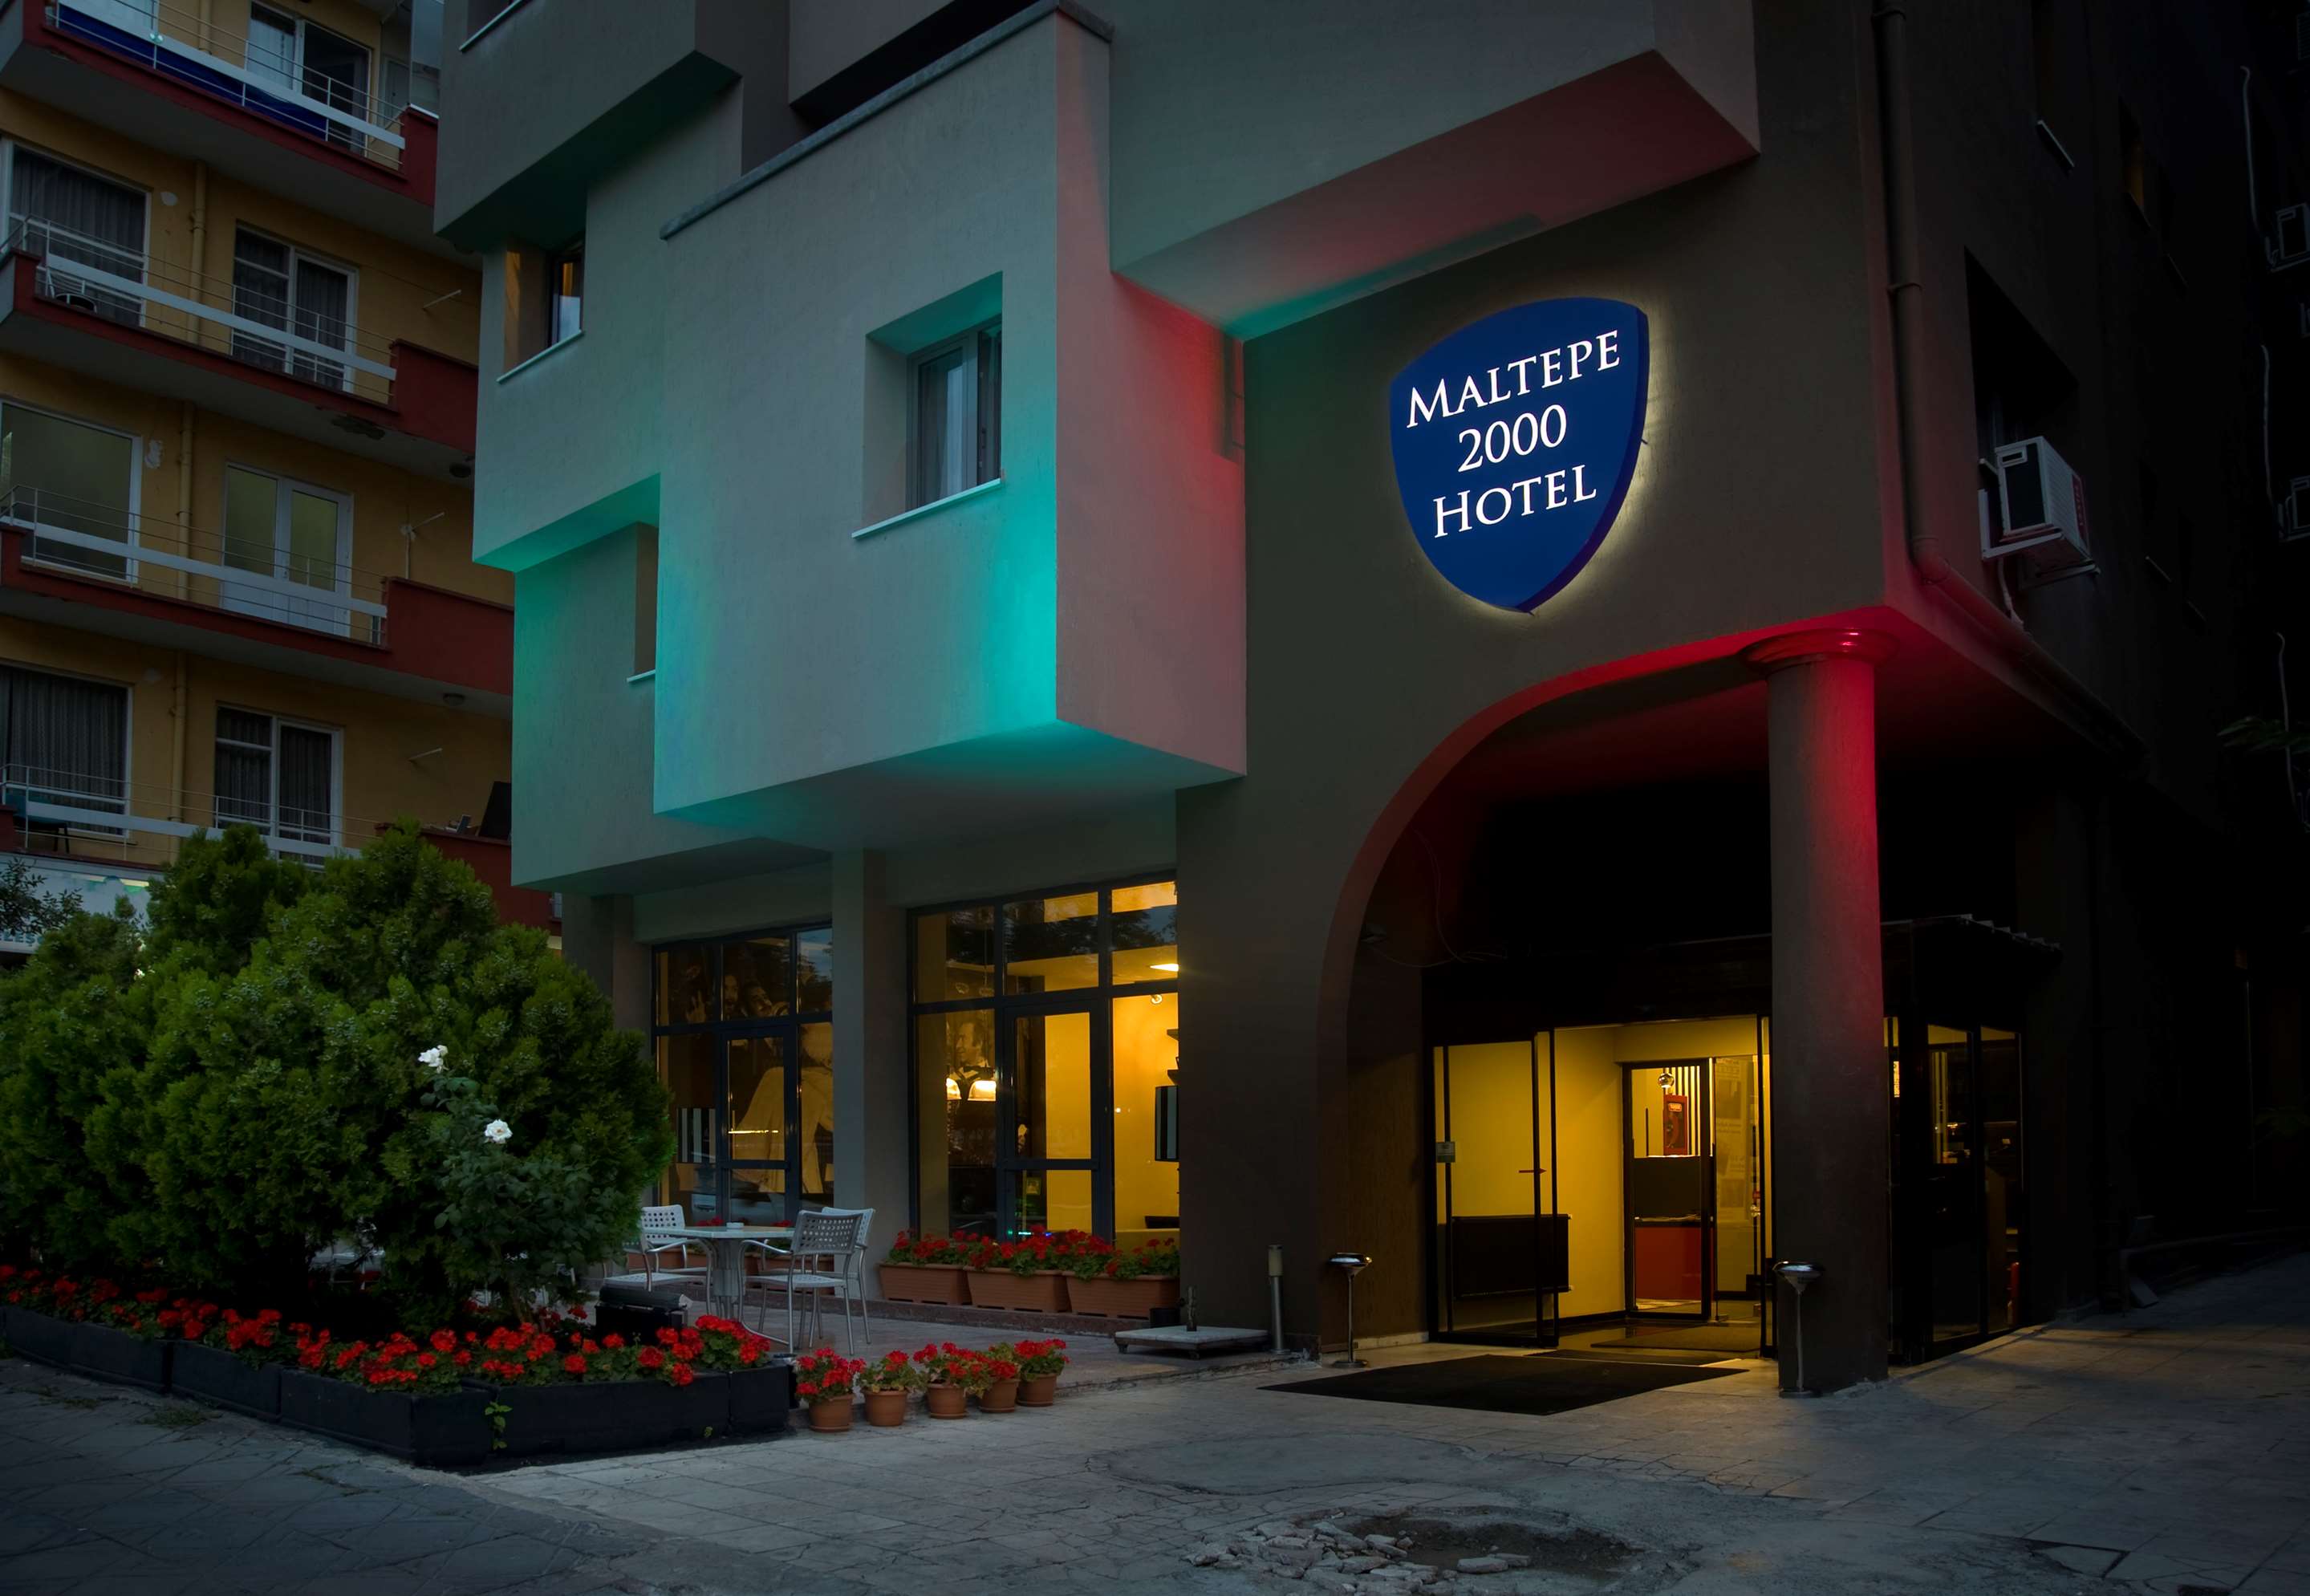 Maltepe Hotel 2000